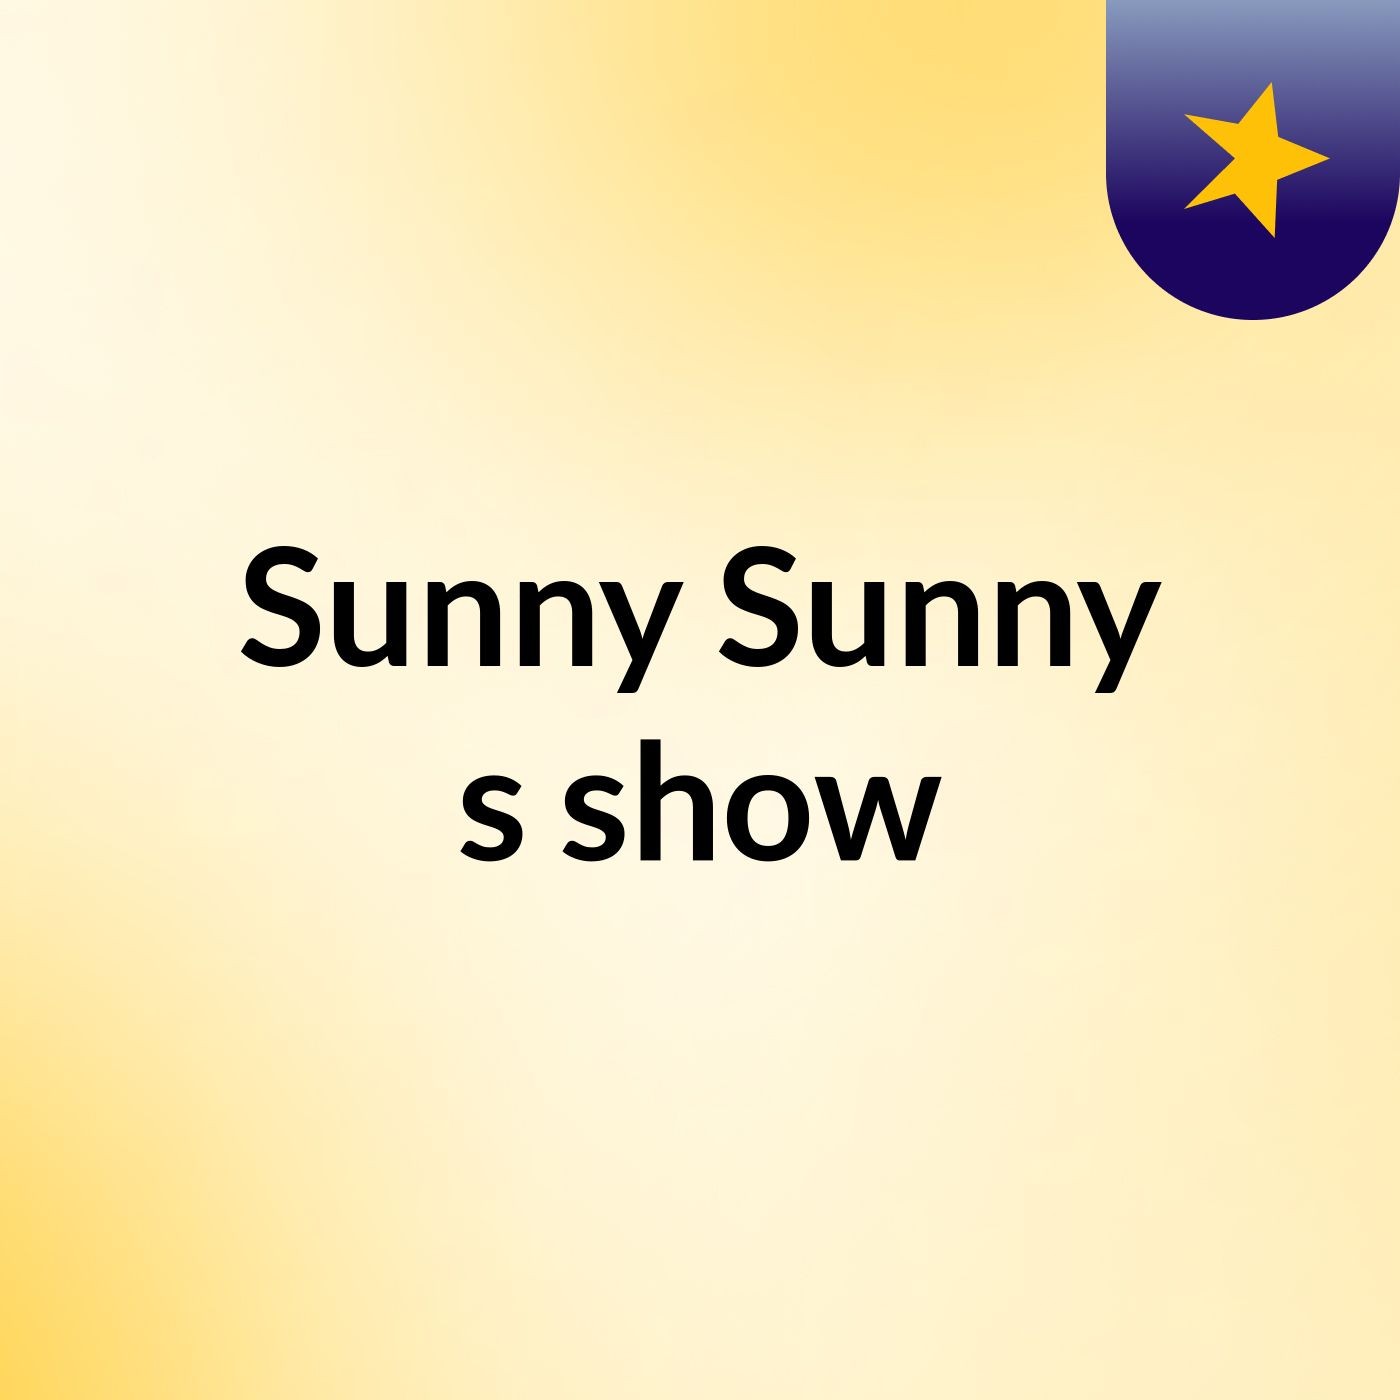 Sunny Sunny's show